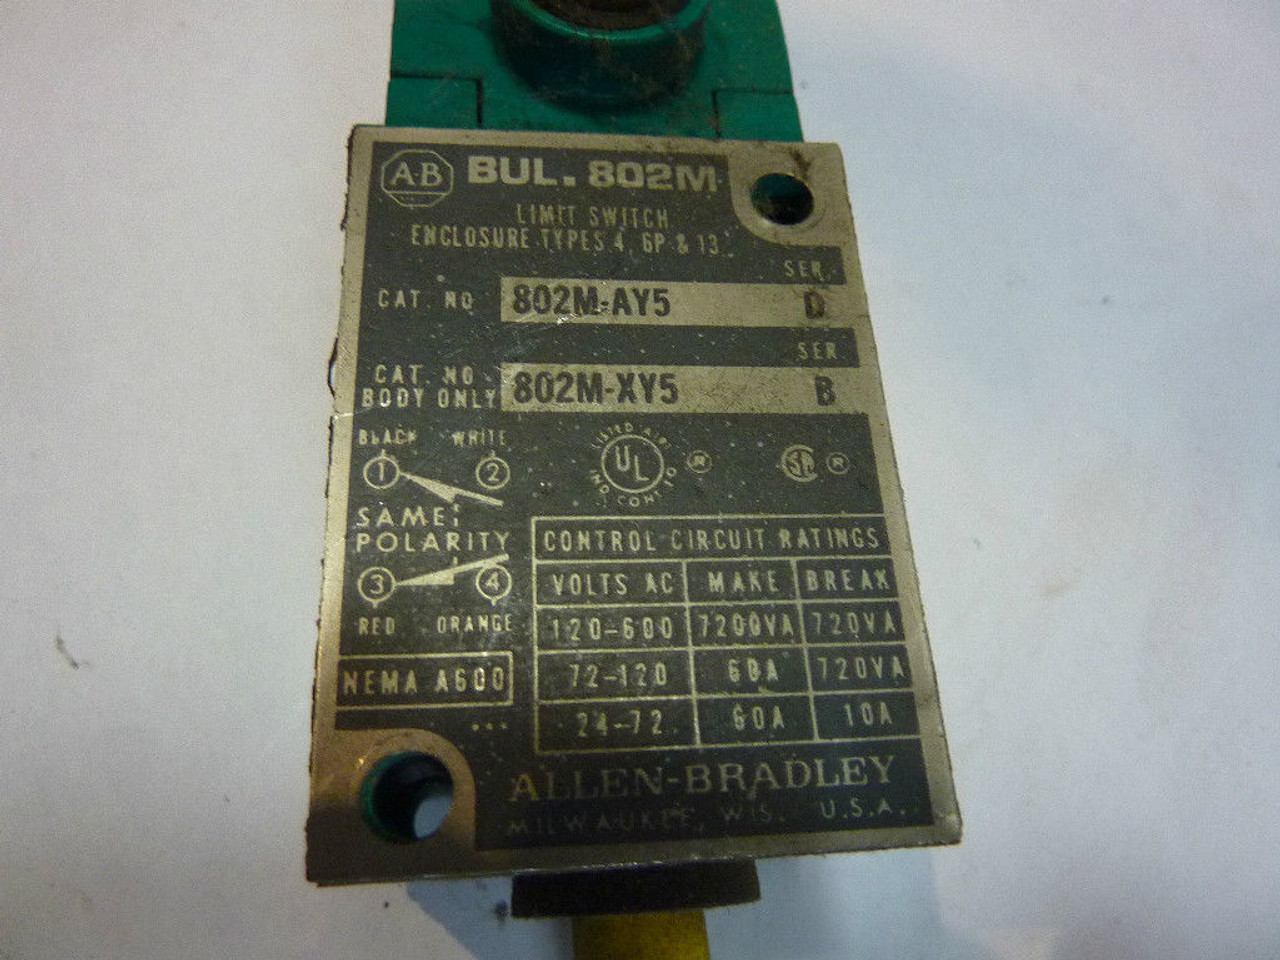 Allen-Bradley 802M-AY5 Limit Switch 10 Amp 600V USED